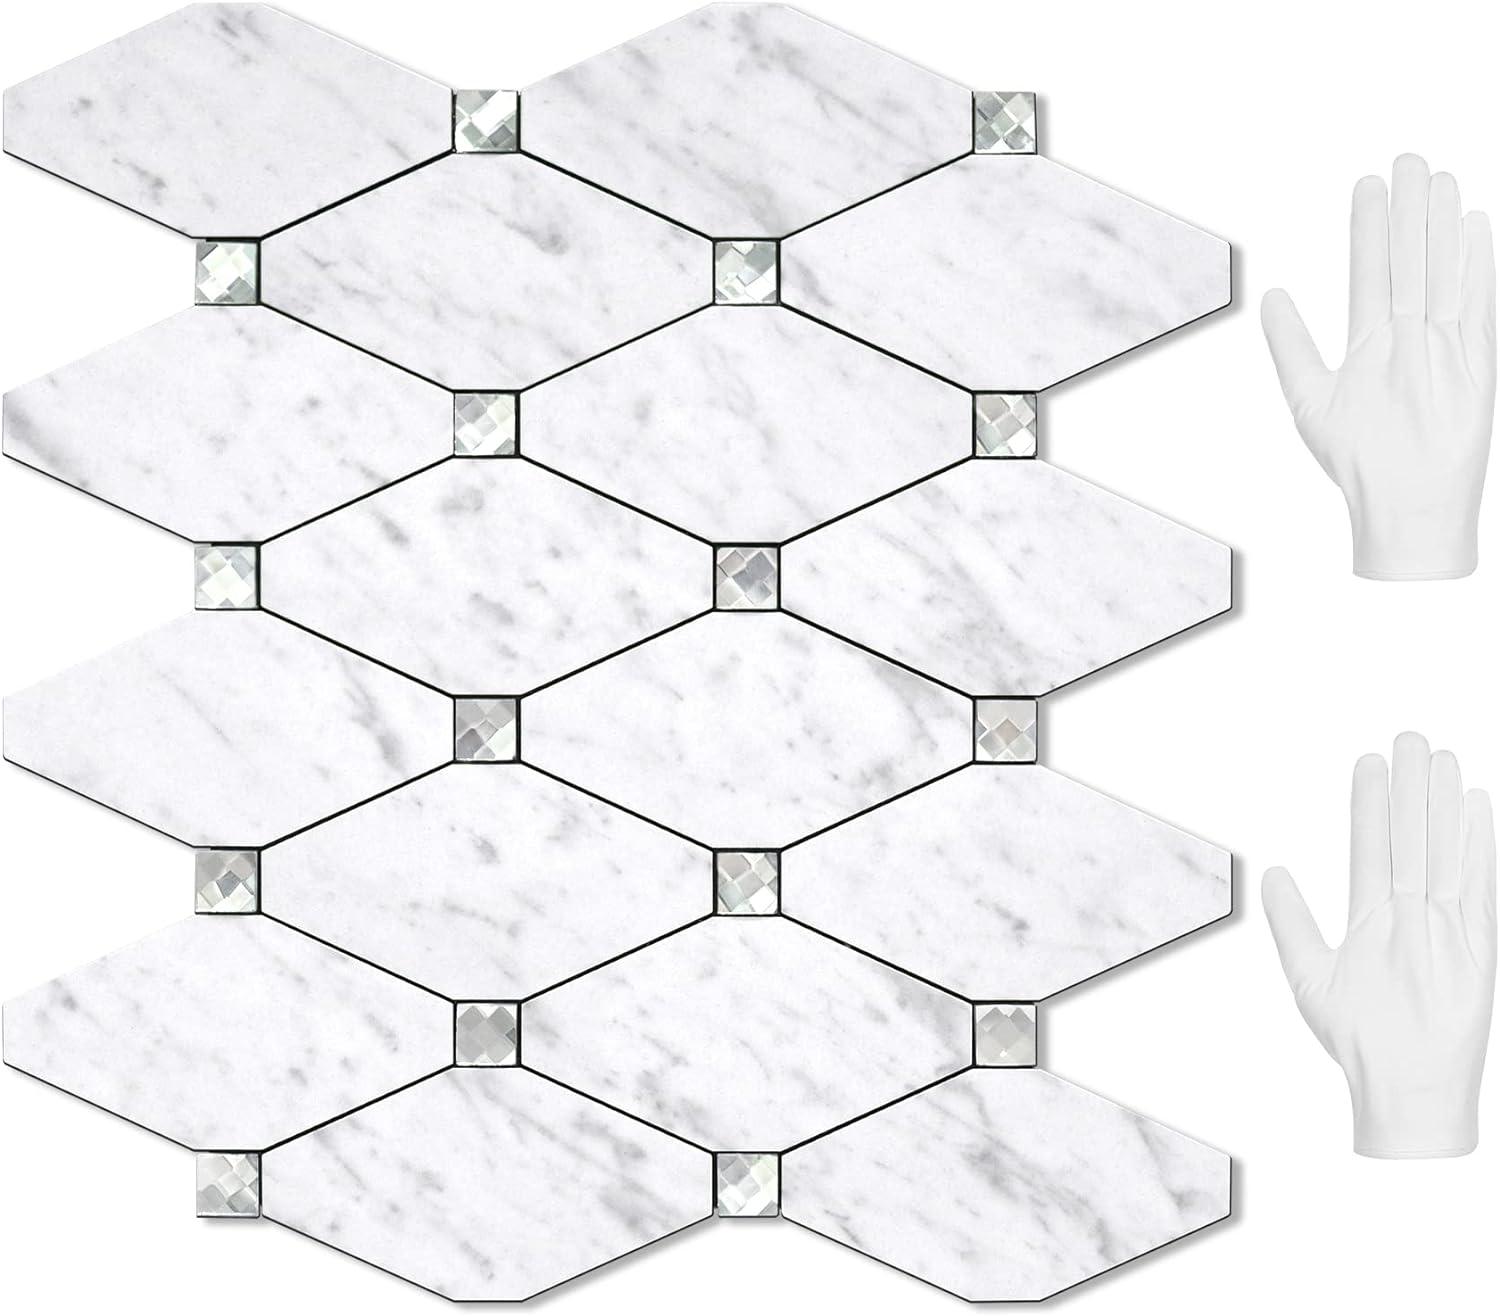 STICKGOO Direct STICKGOO 10 Sheets Peel and Stick Backsplash, Carrara White Stick on Mosaic Tiles for Kitchen Wall Decor, PVC Mixed Glass Self